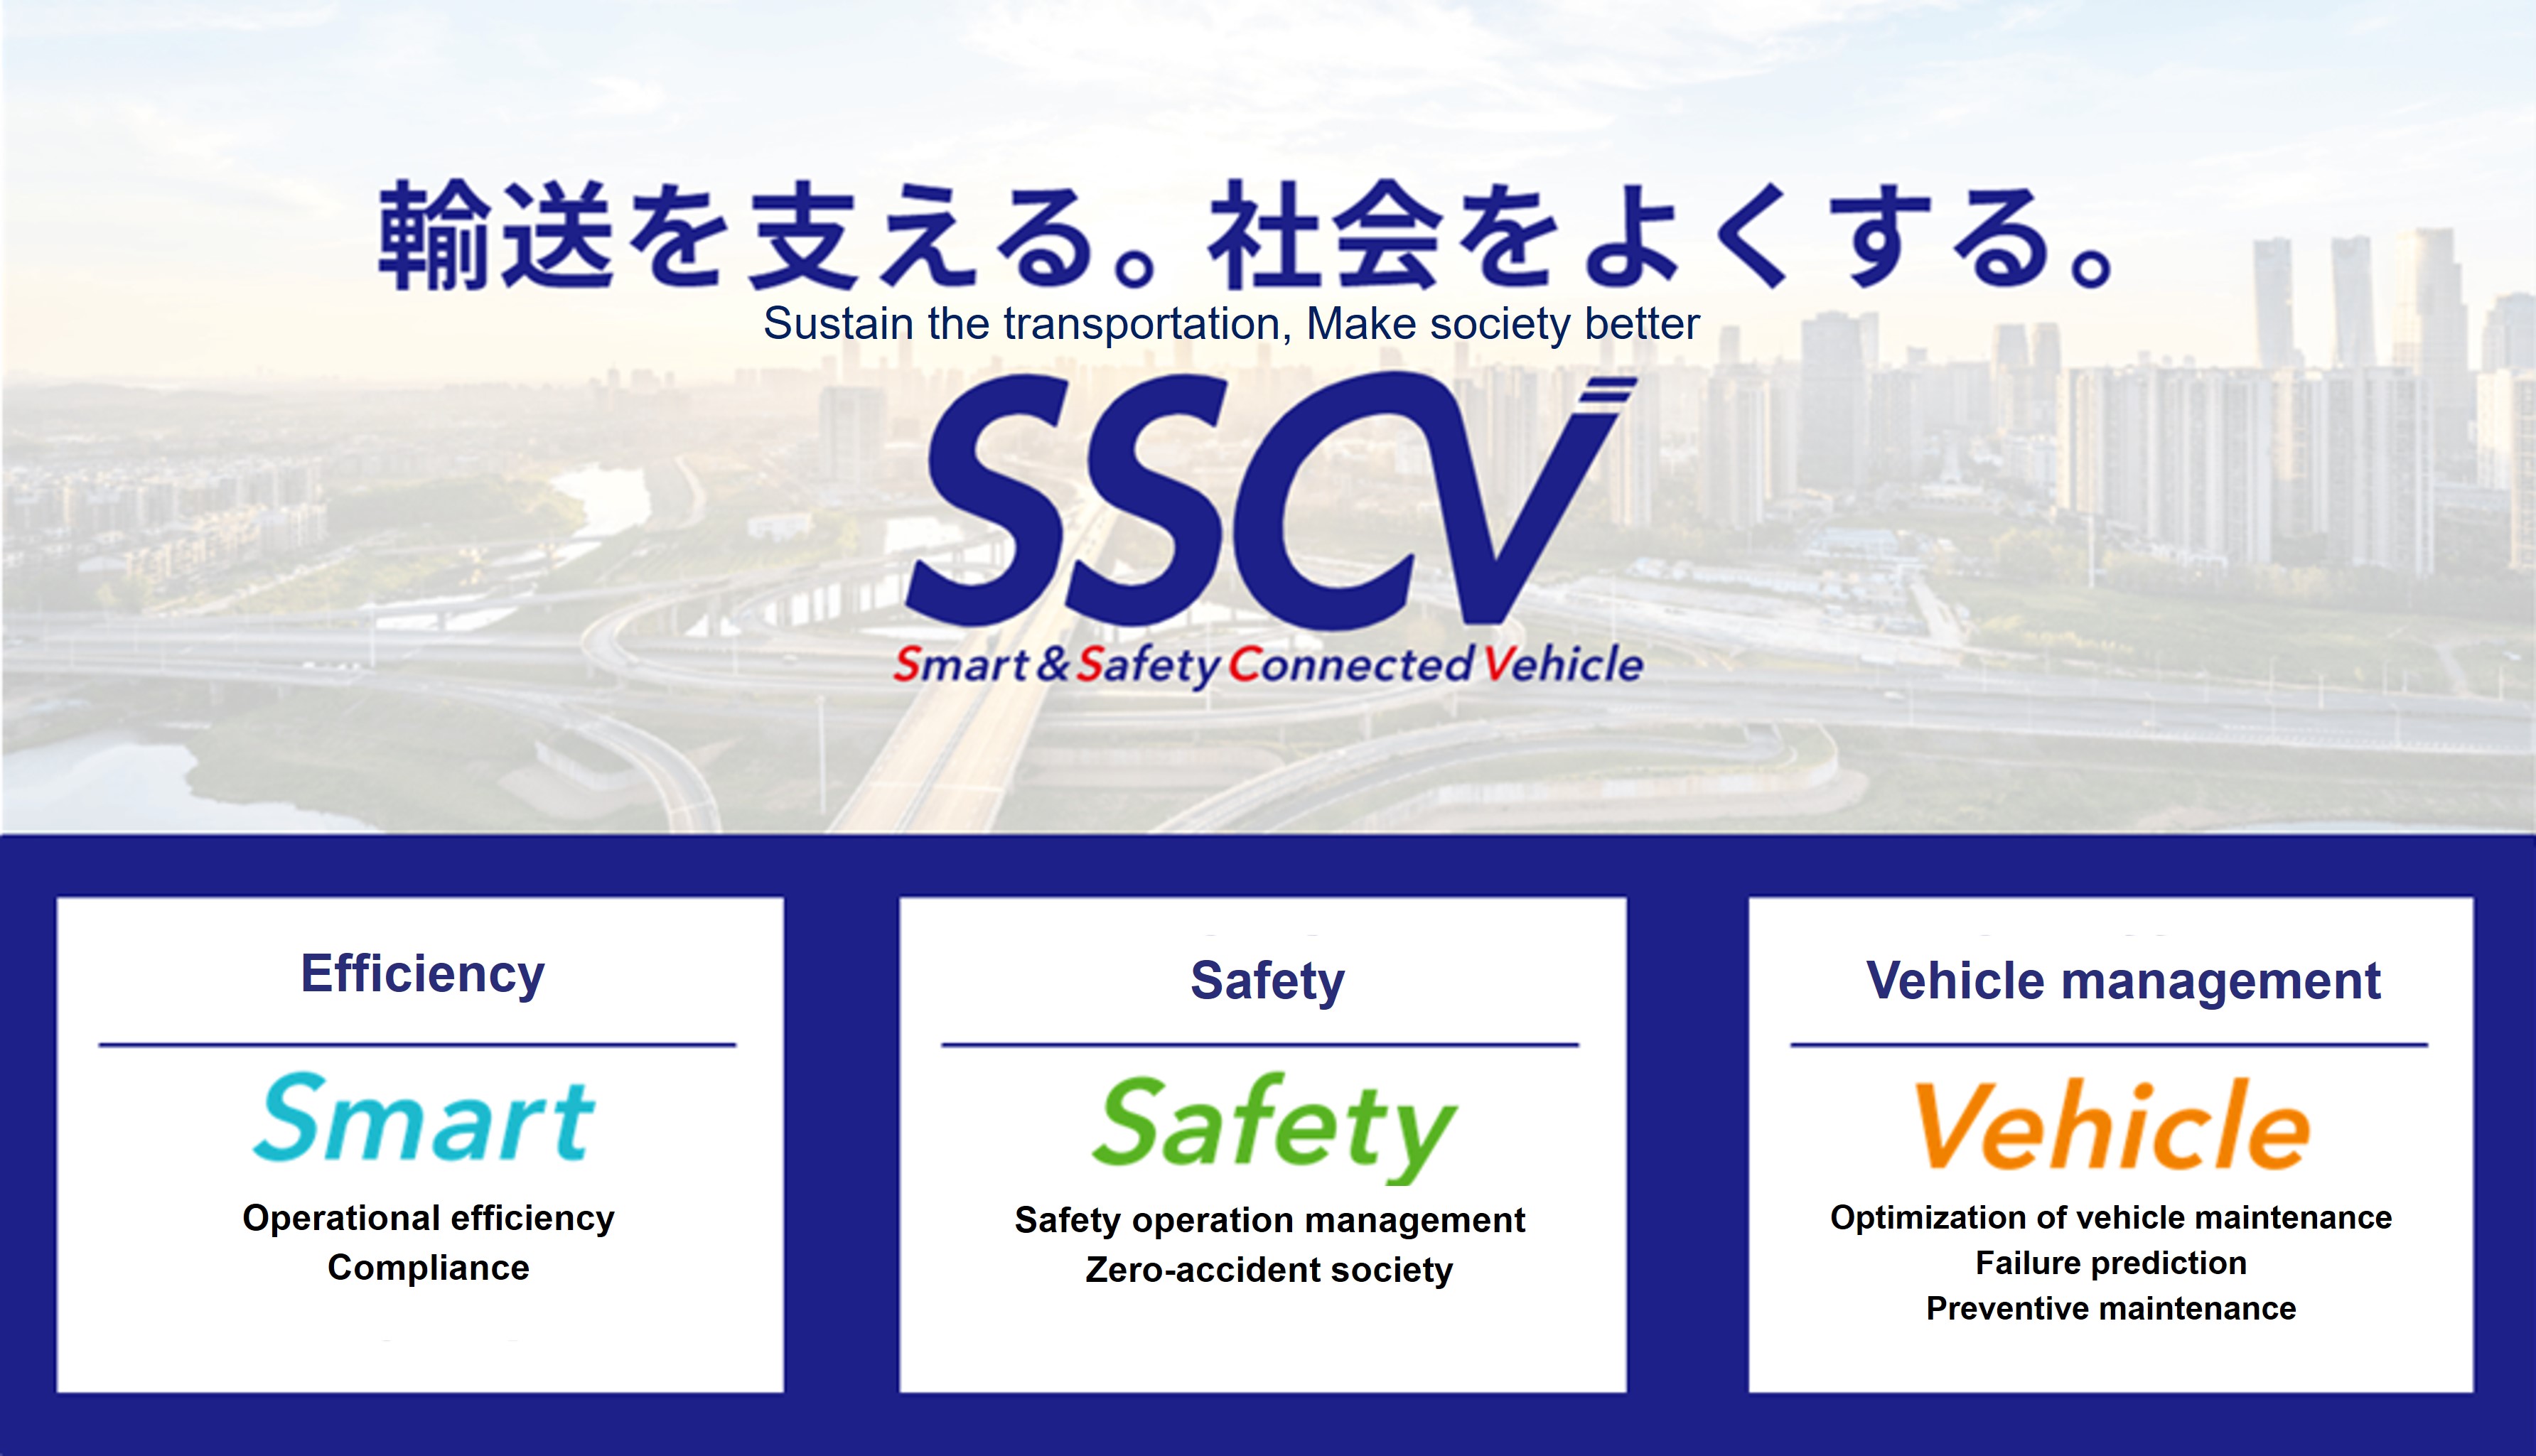 SSCV concept image